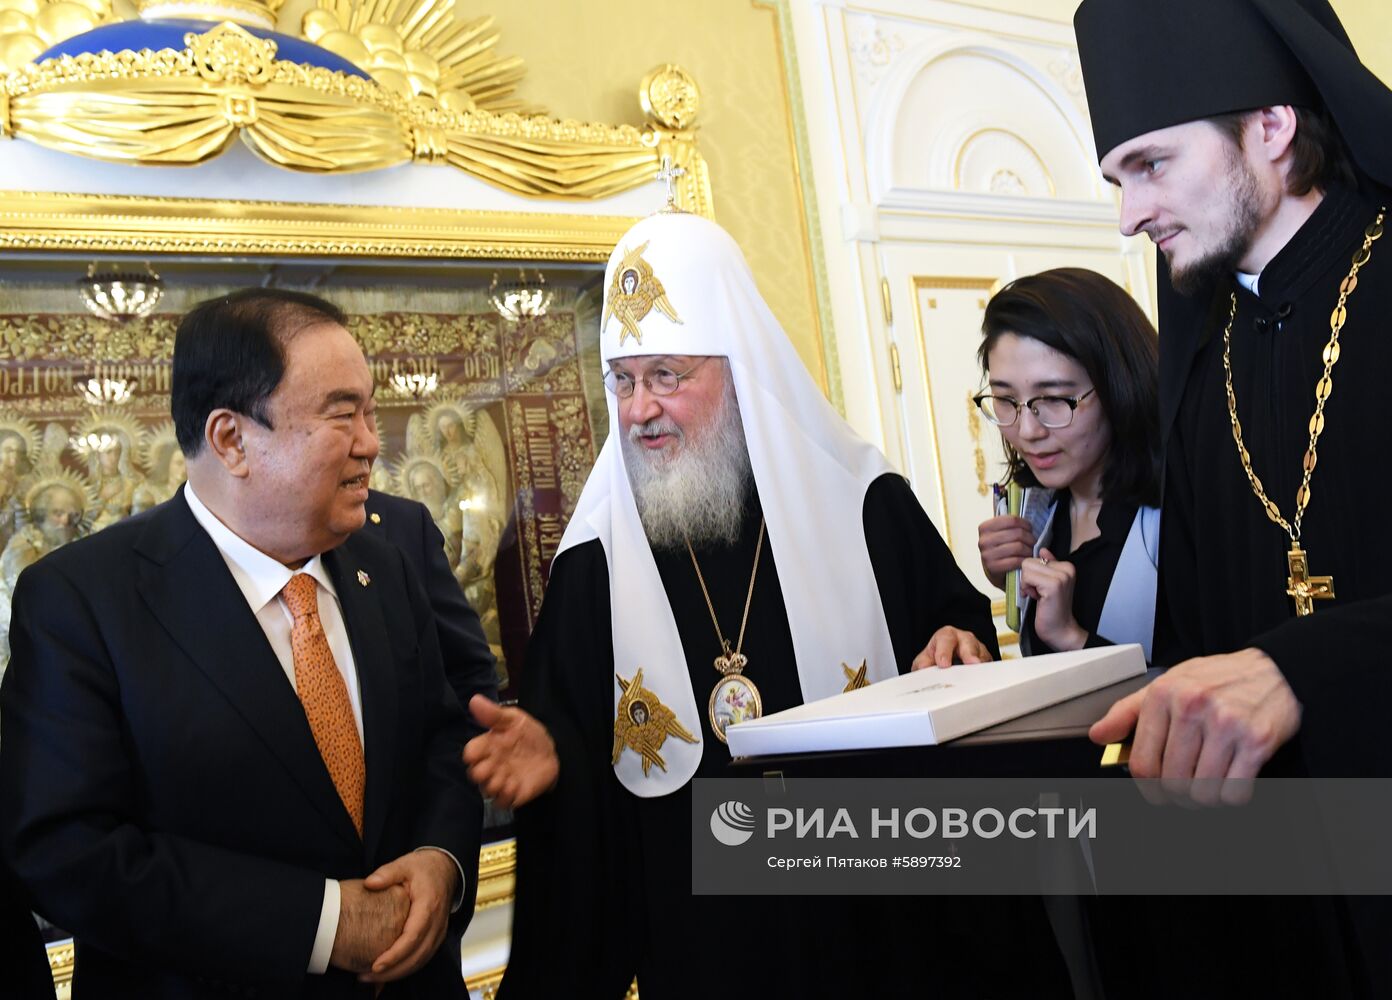 Встреча патриарха Кирилла с главой парламента Южной Кореи Мун Хи Саном